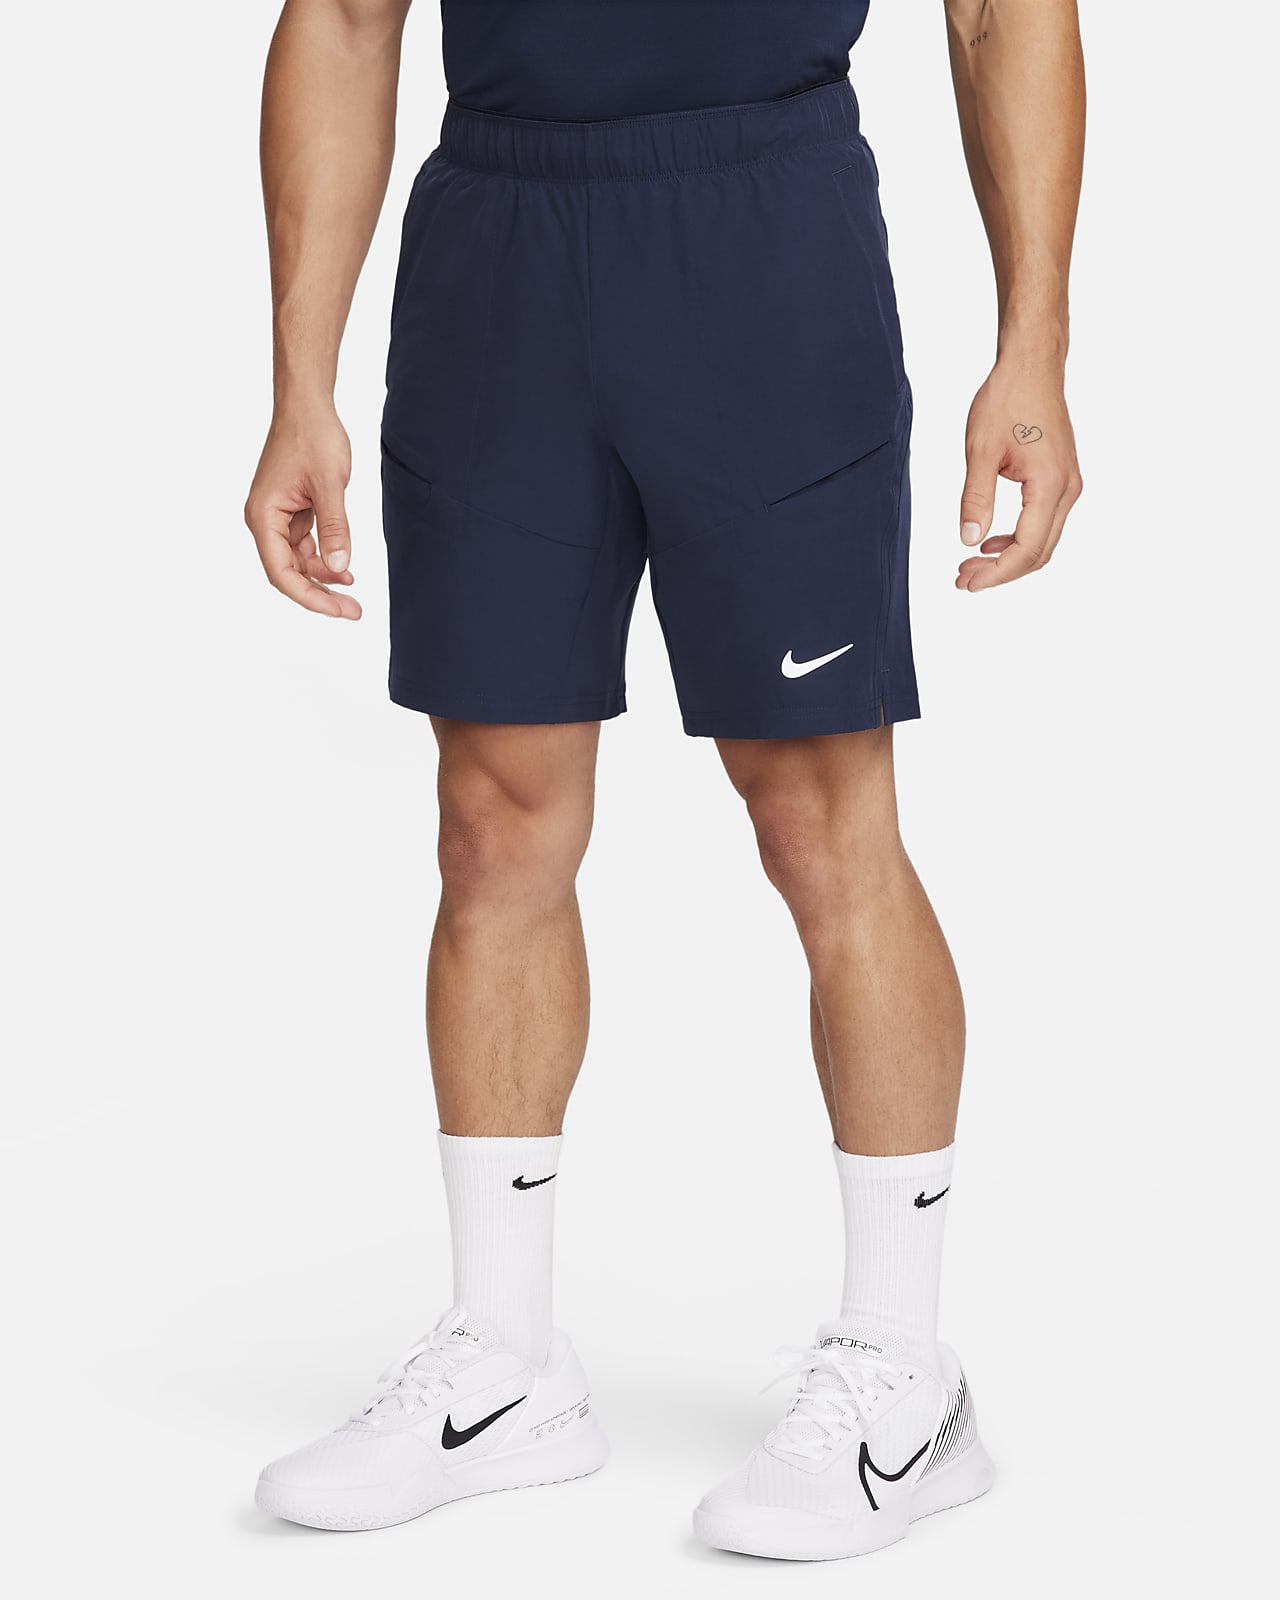 NikeCourt Advantage Men's 23cm (approx.) Tennis Shorts